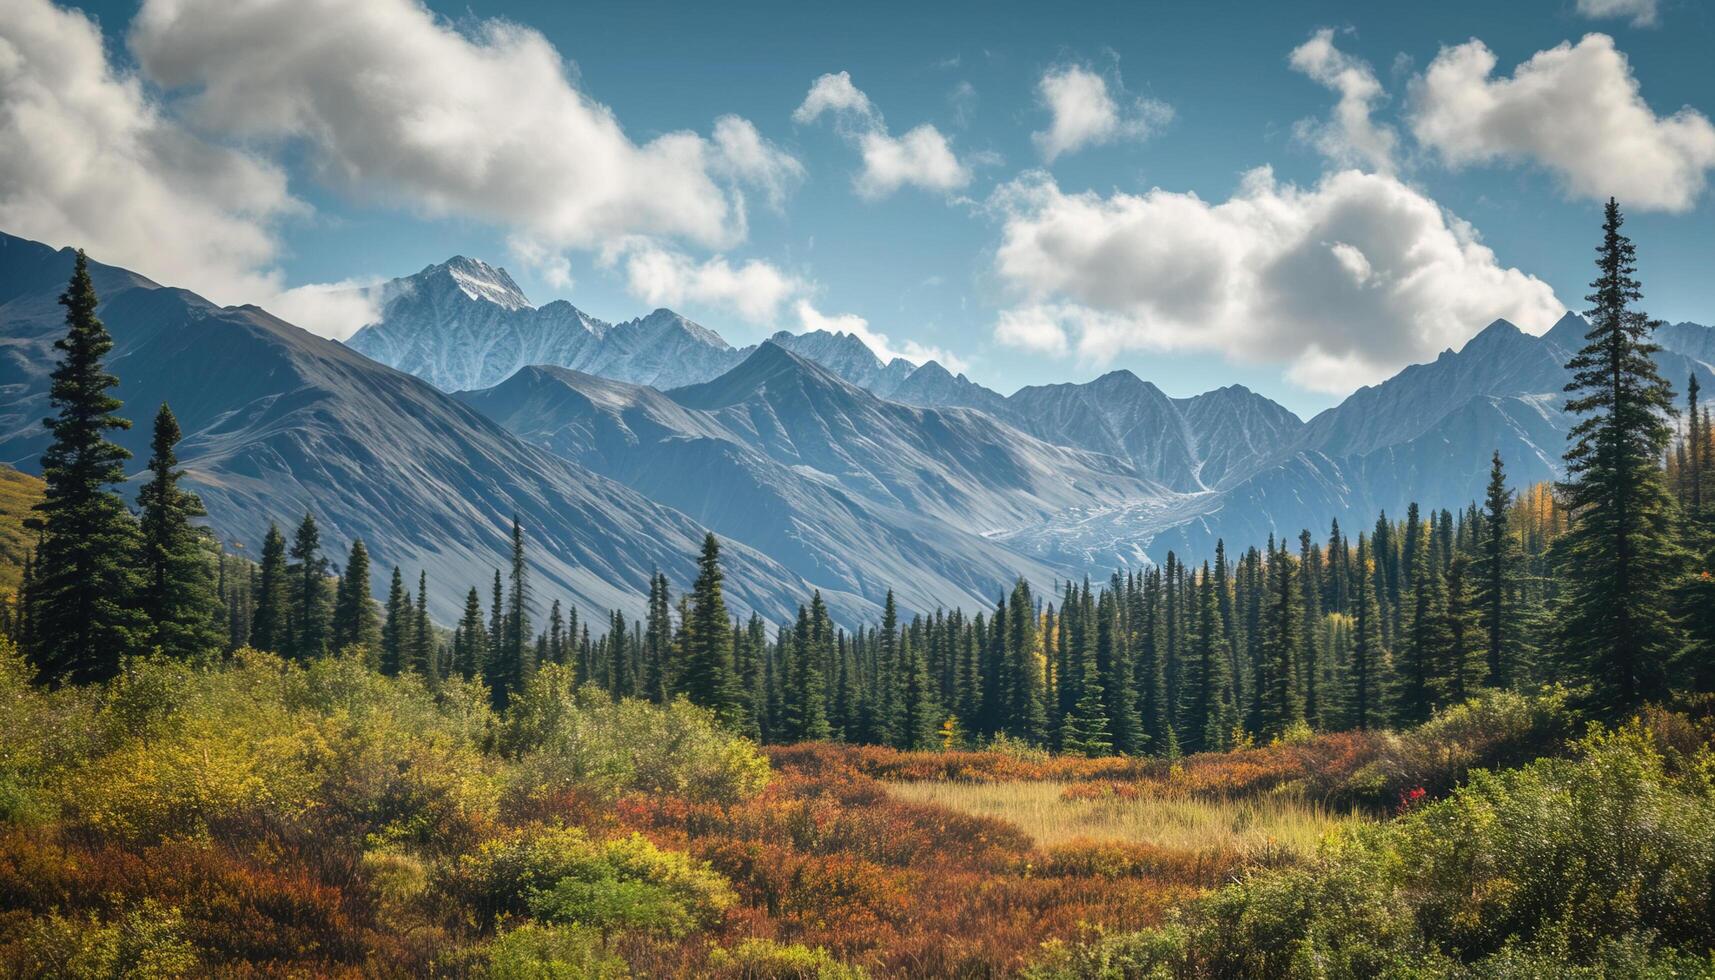 ai generado Nevado montañas de Alaska, paisaje con bosques, valles, y ríos en tiempo de día. asombroso naturaleza composición antecedentes fondo de pantalla, viaje destino, aventuras al aire libre foto